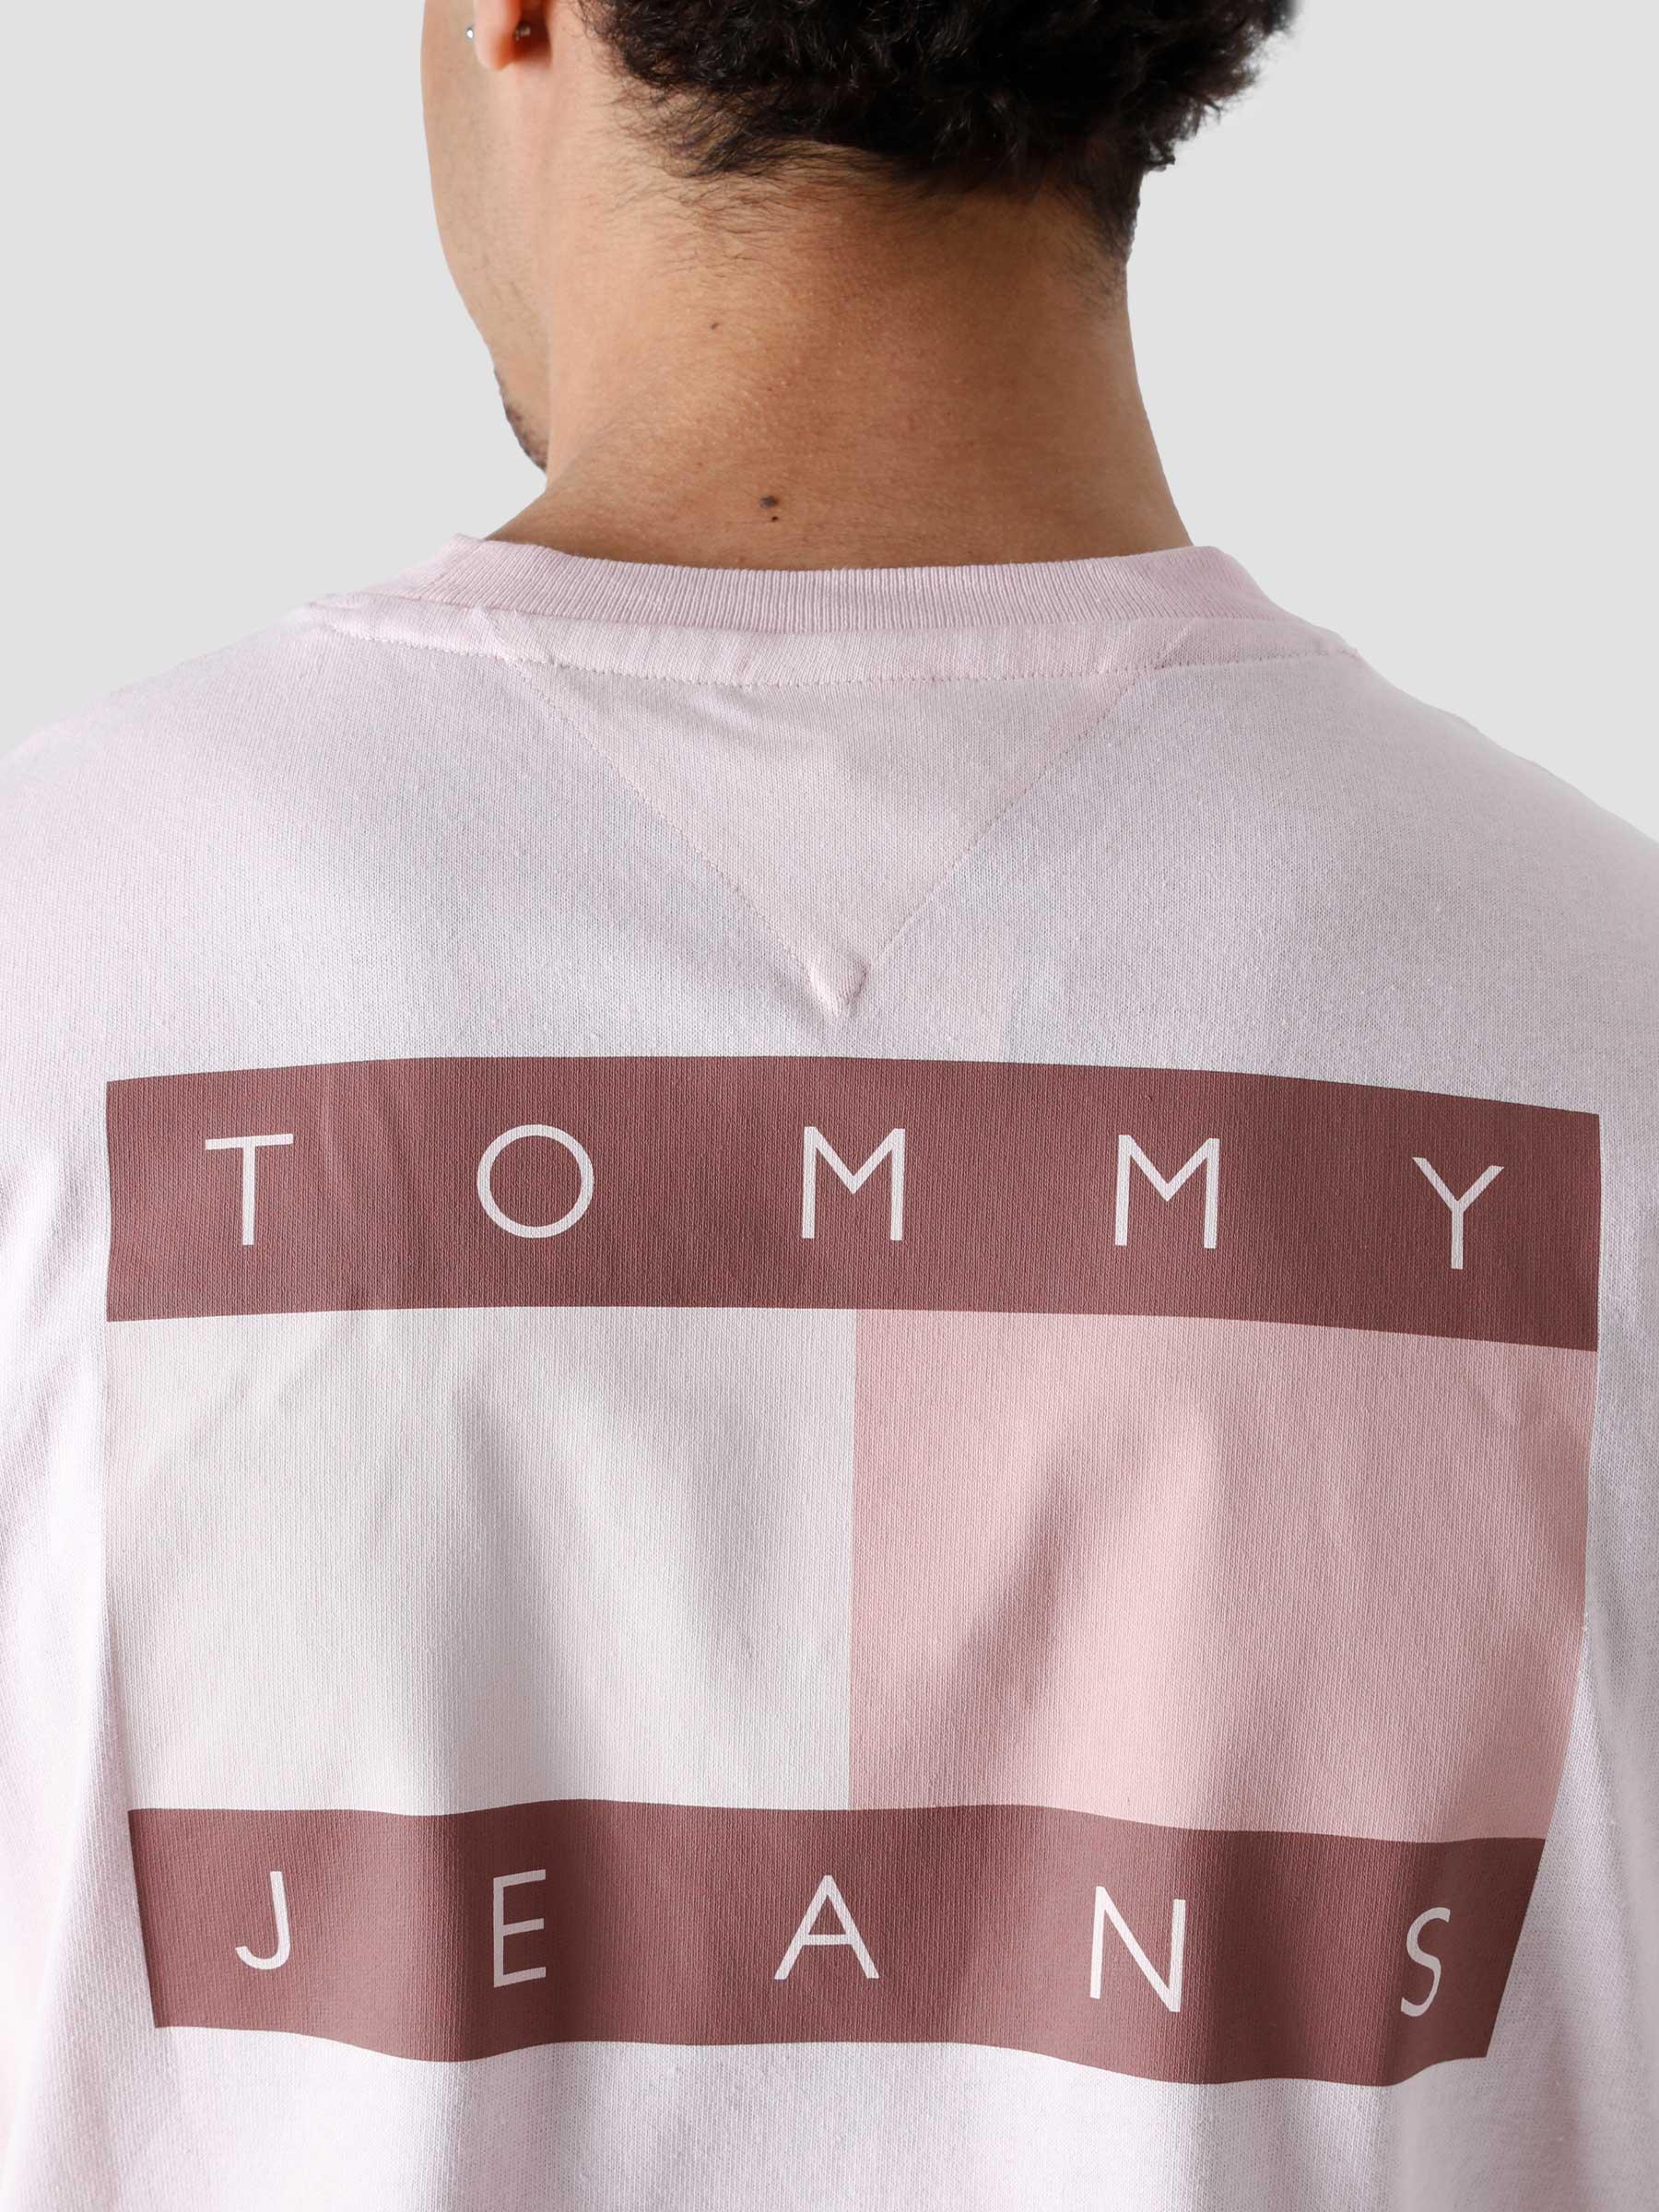 Tommy Jeans TJM Best Graphic T-Shirt - Freshcotton Pink Broadway